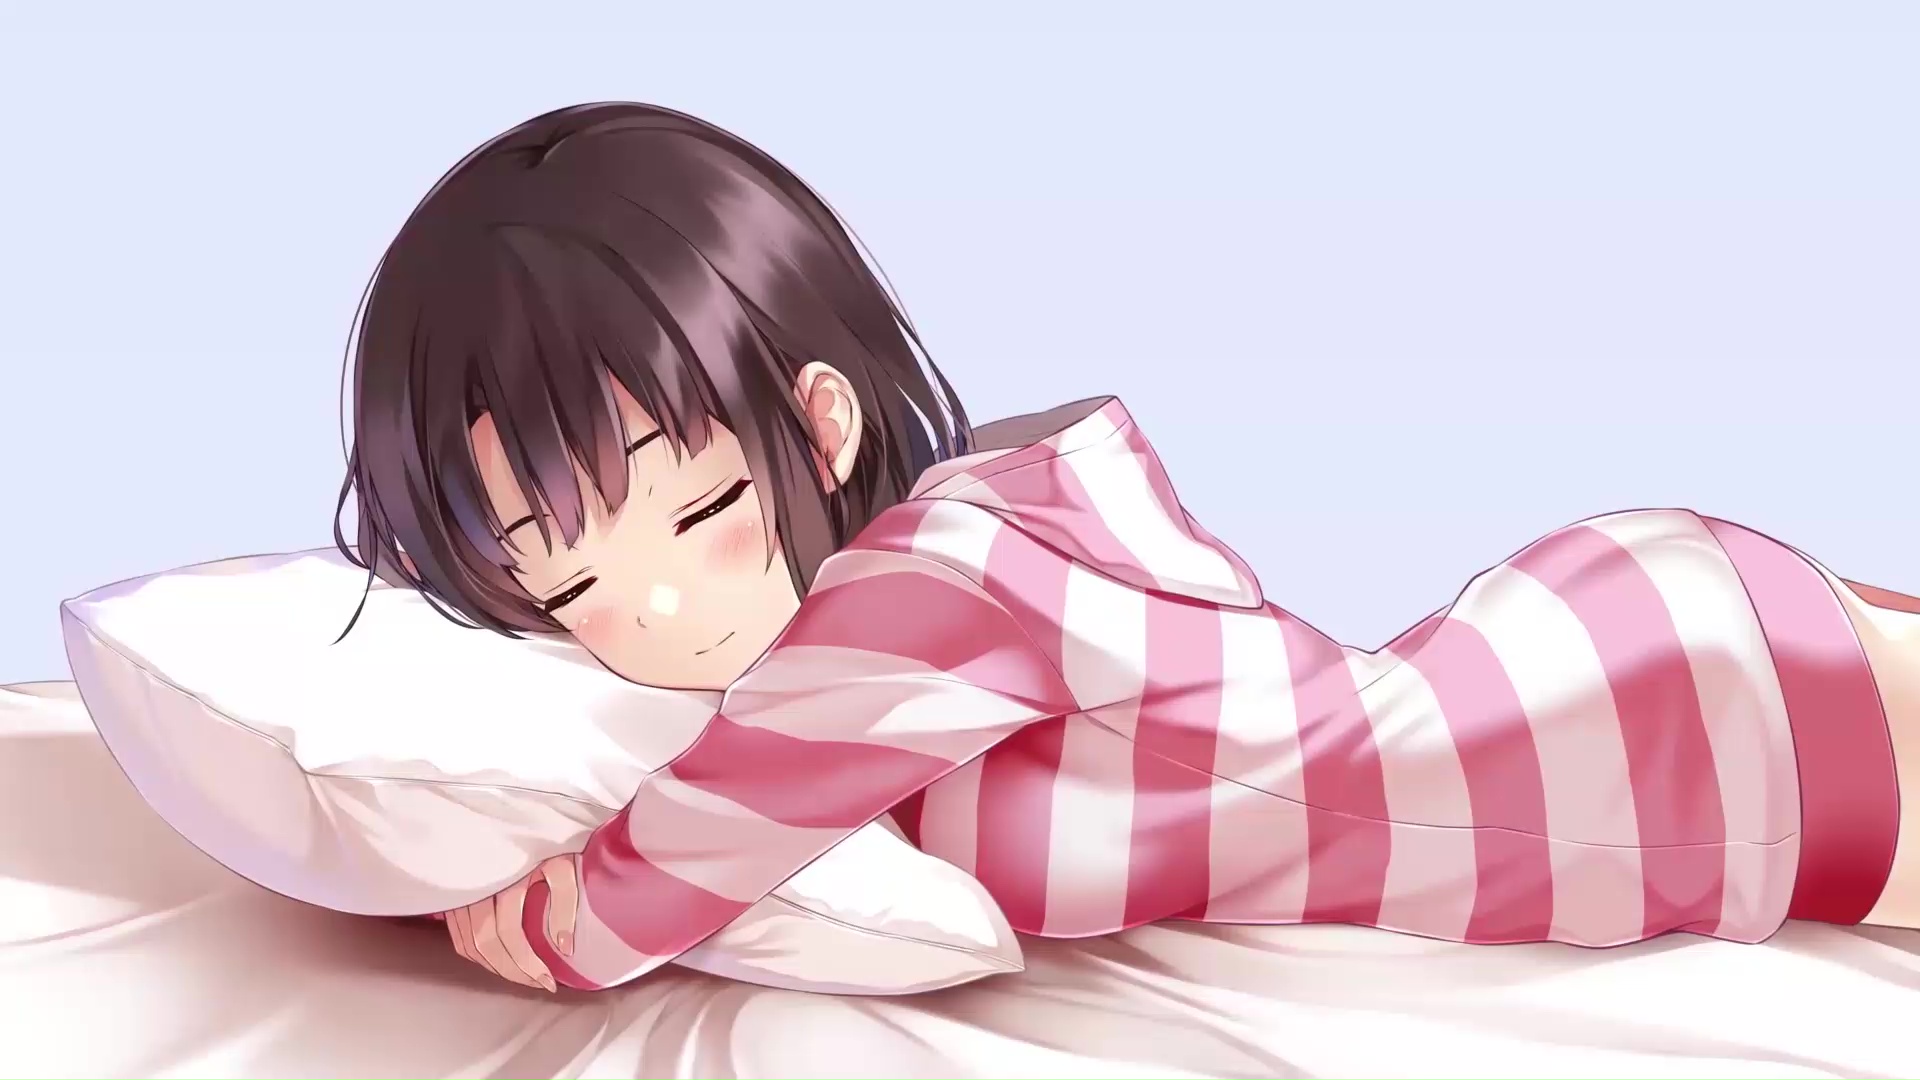 pretty anime girl sleeping, manga style illustration generative ai 23913550  Stock Photo at Vecteezy